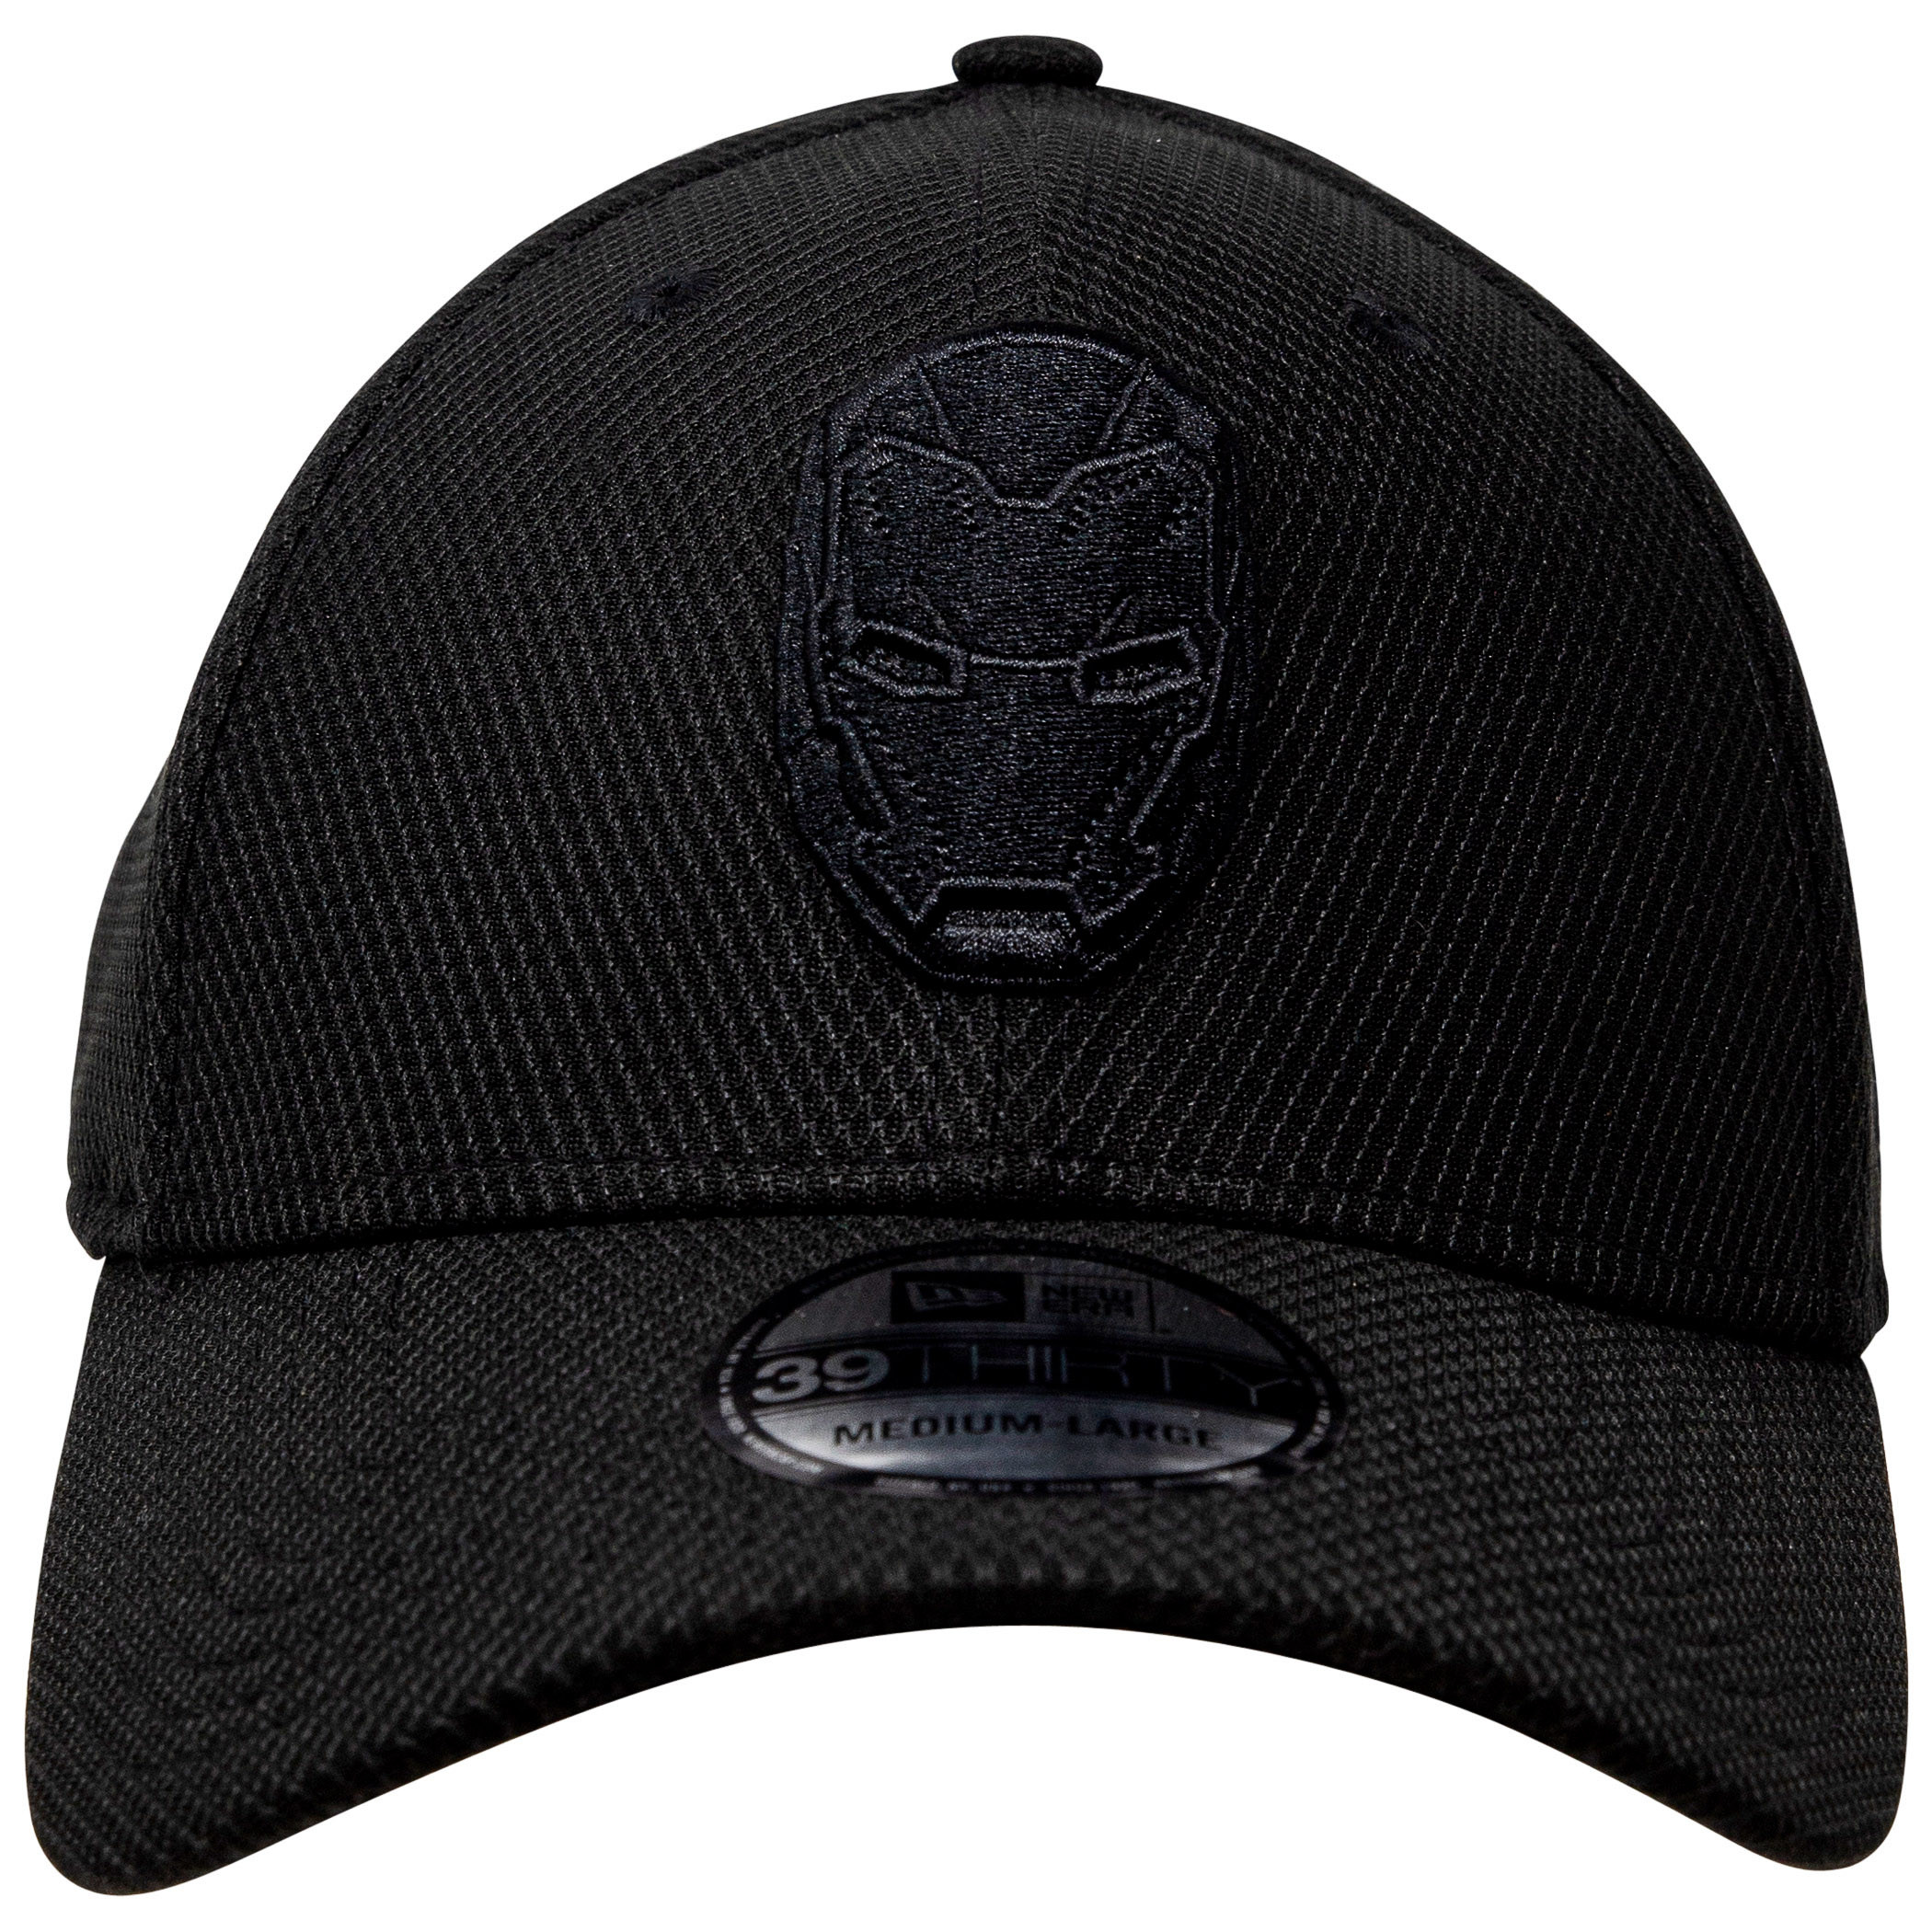 Long Live Iron Man MCU Memorial New Era 39Thirty Flex Fitted Hat